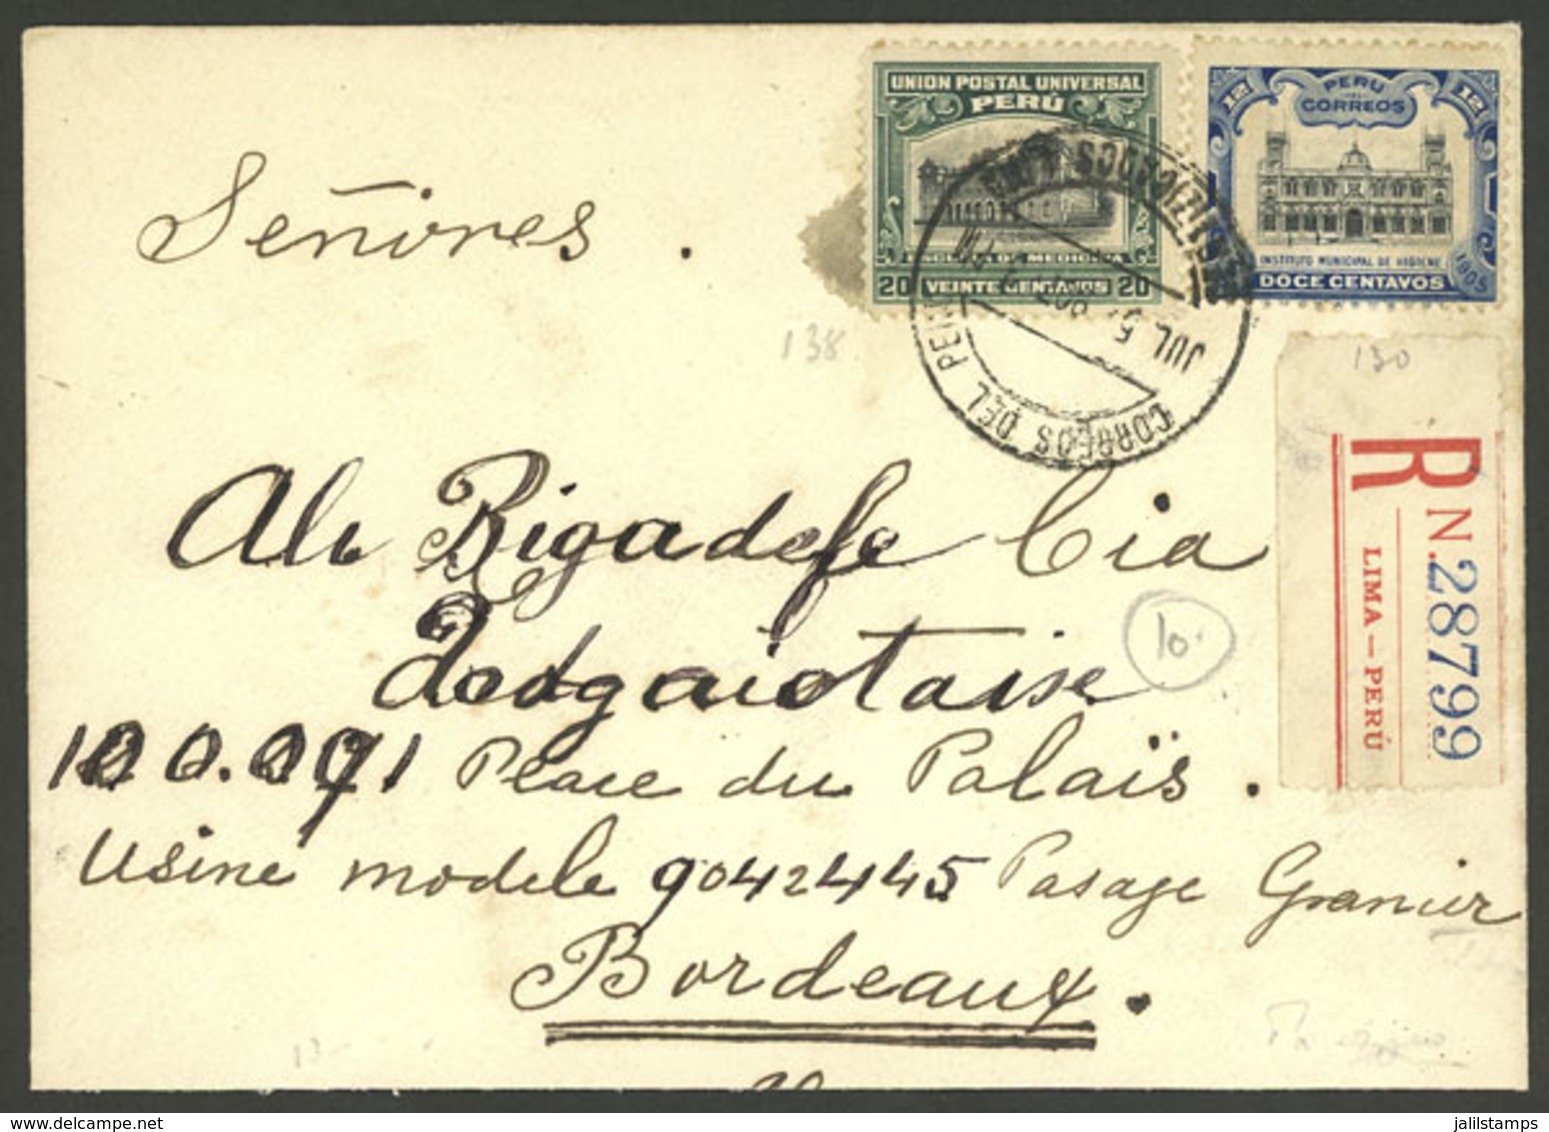 PERU: 5/JUL/1905 Lima - France, Registered Cover Franked With 32c. (10c. Registration Fee + 22c. Postage), Very Nice! - Perú